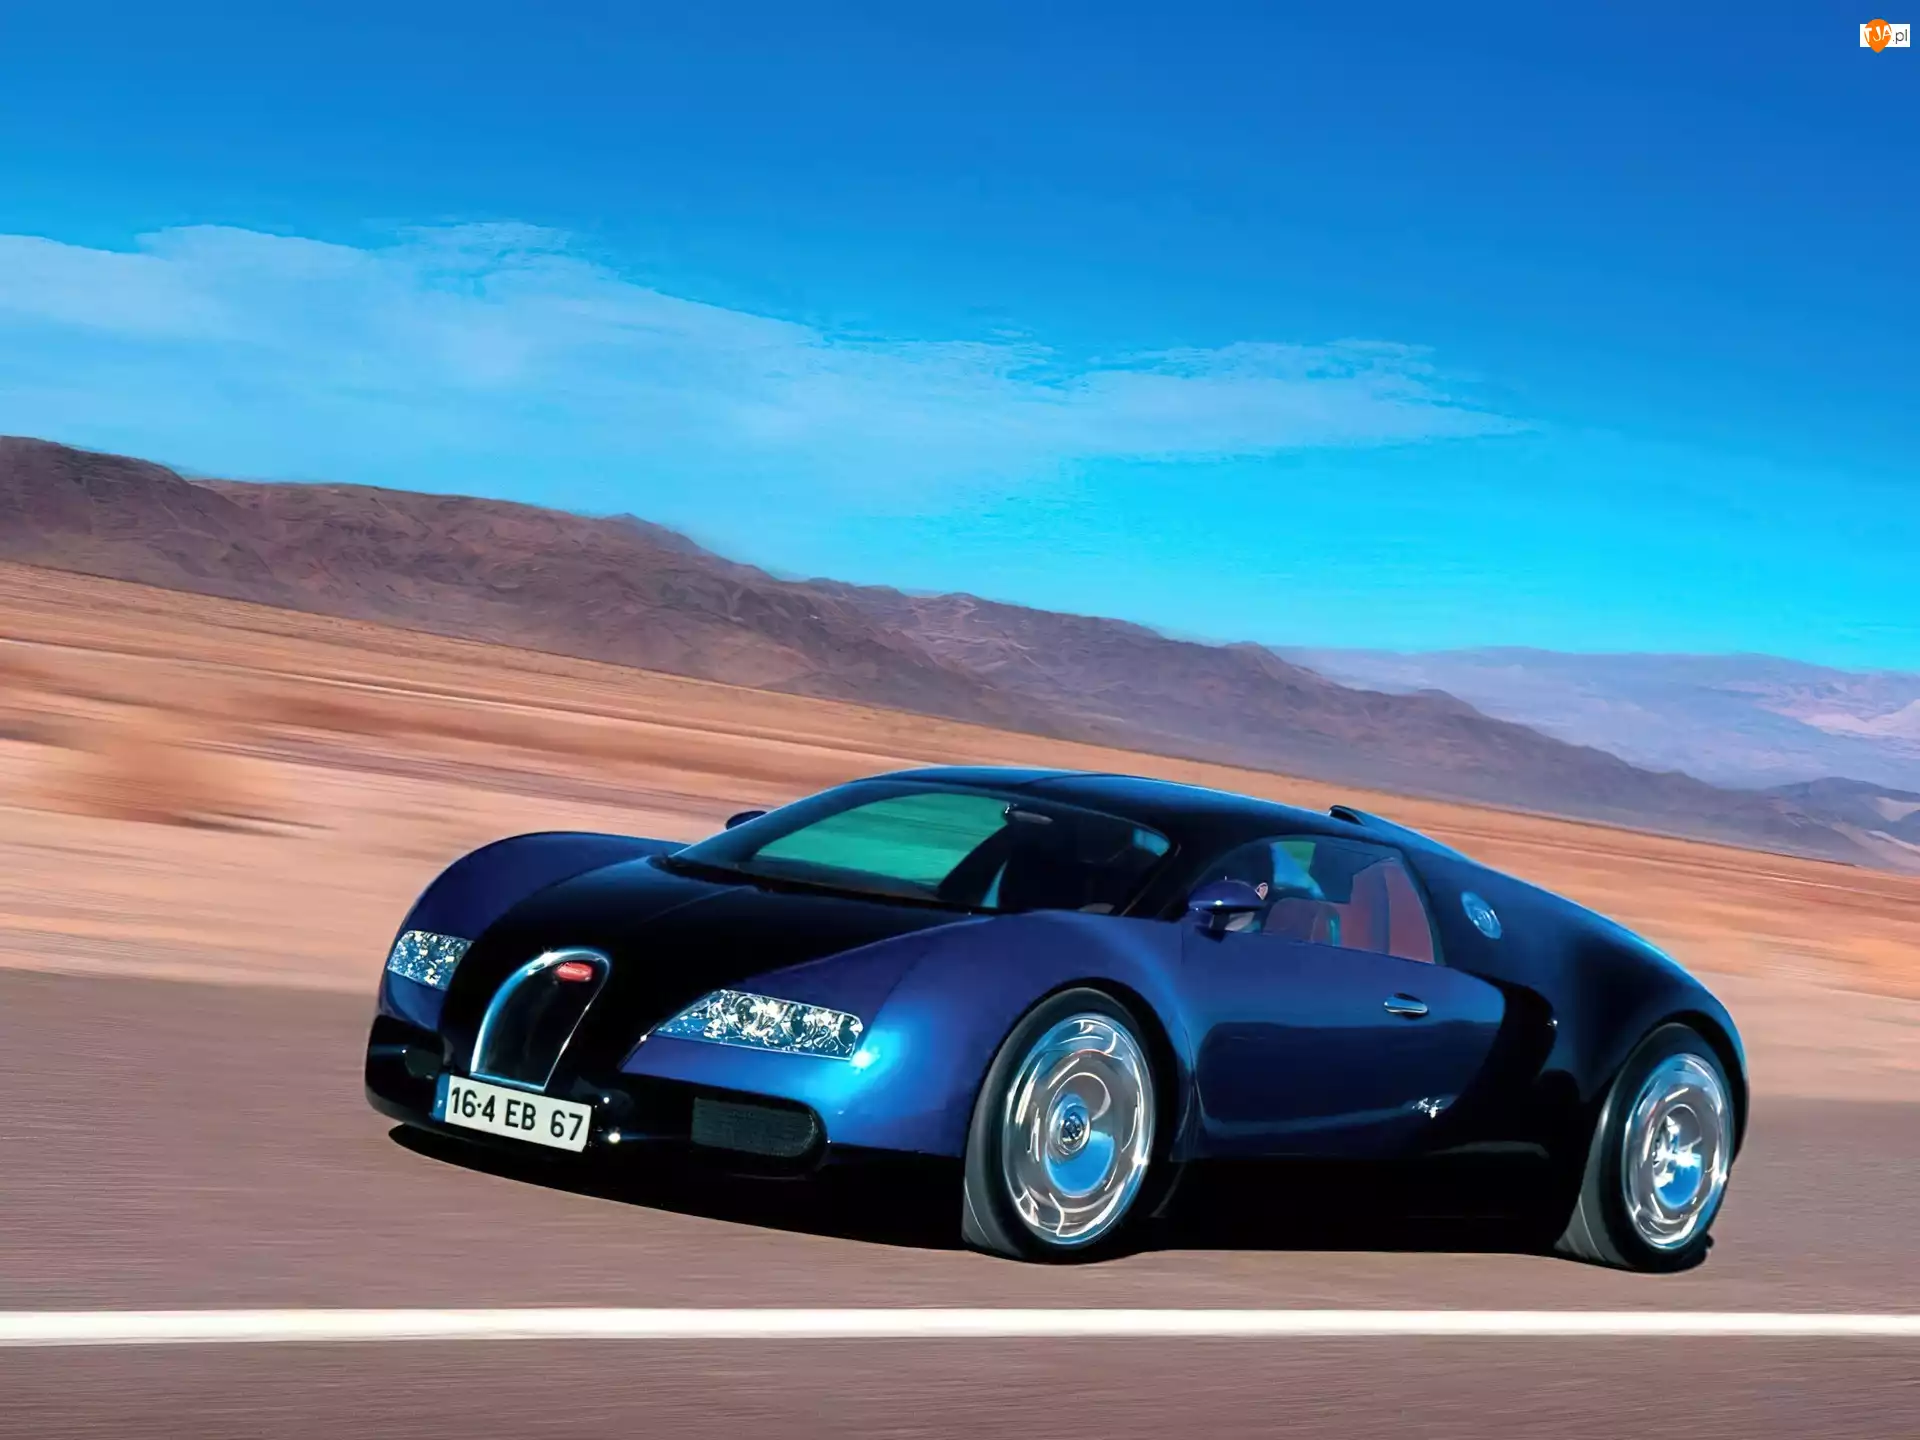 Pustynia, Bugatti Veyron